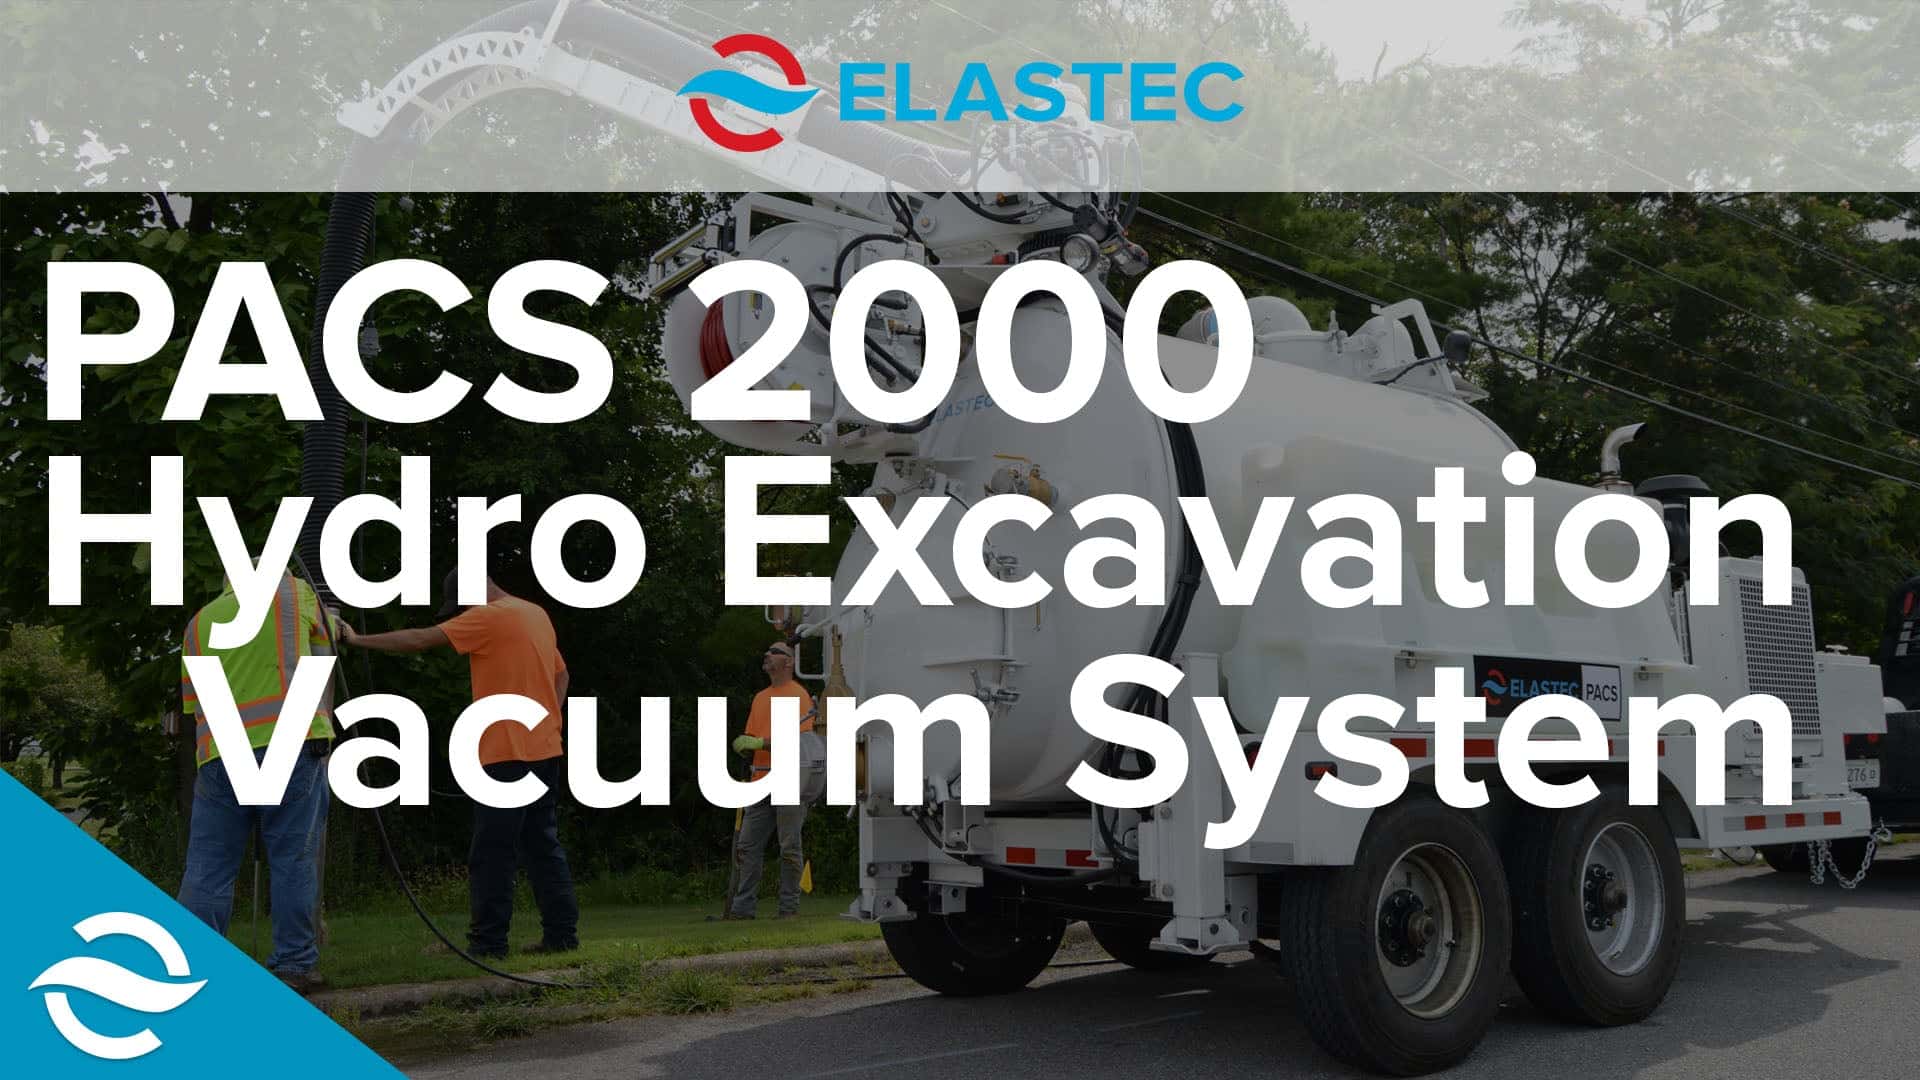 PACS 2000 Hydro Excavation Vacuum System